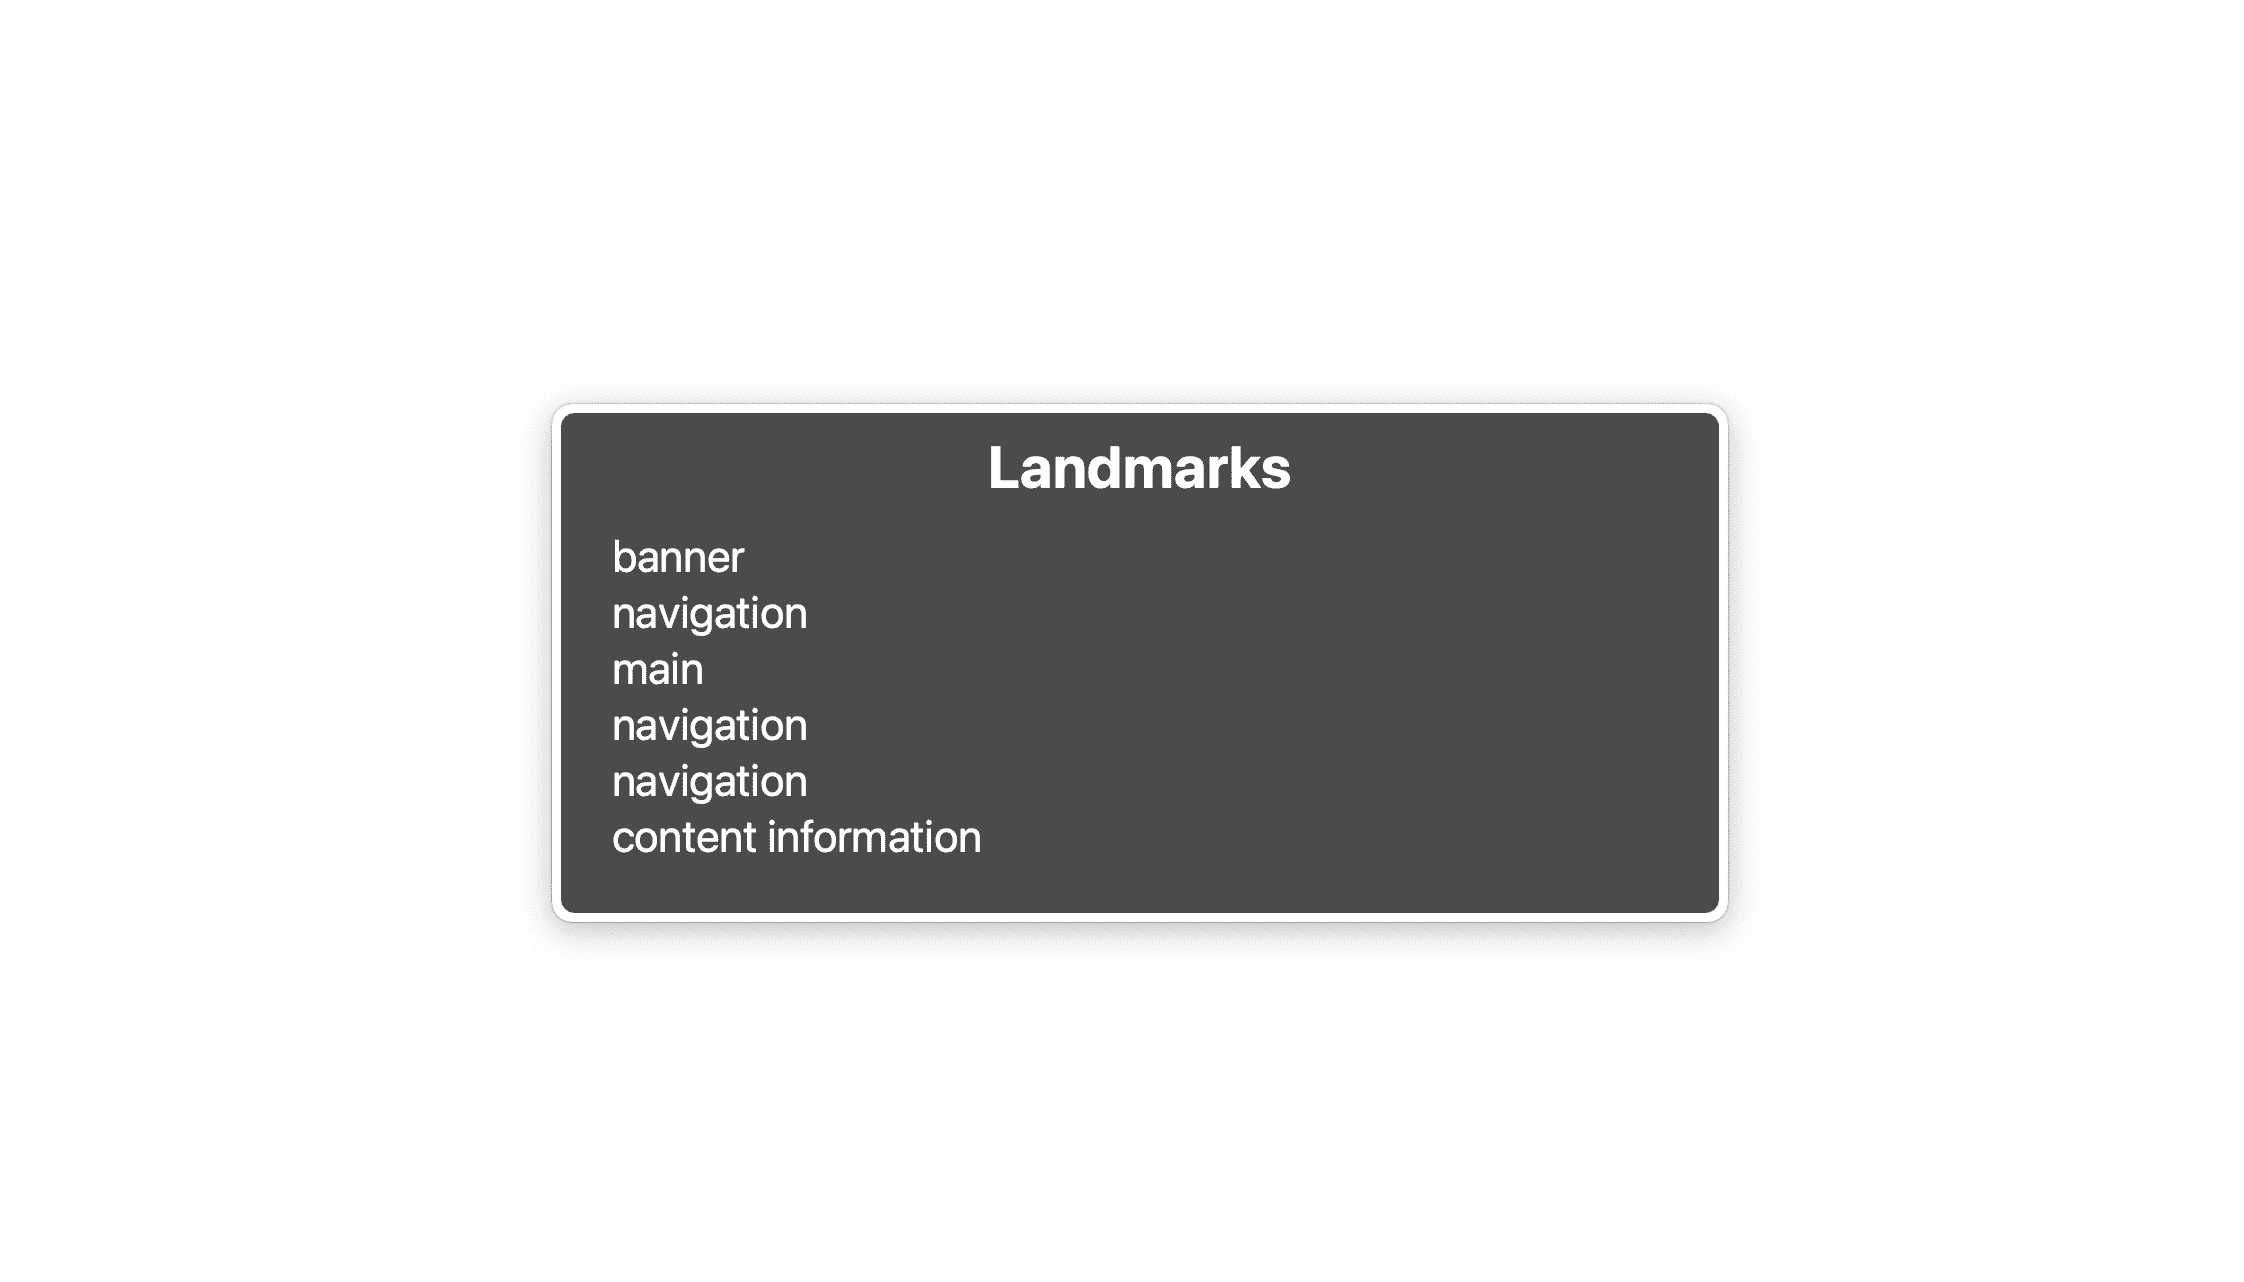 Image showing three landmarks that all say 'navigation'.